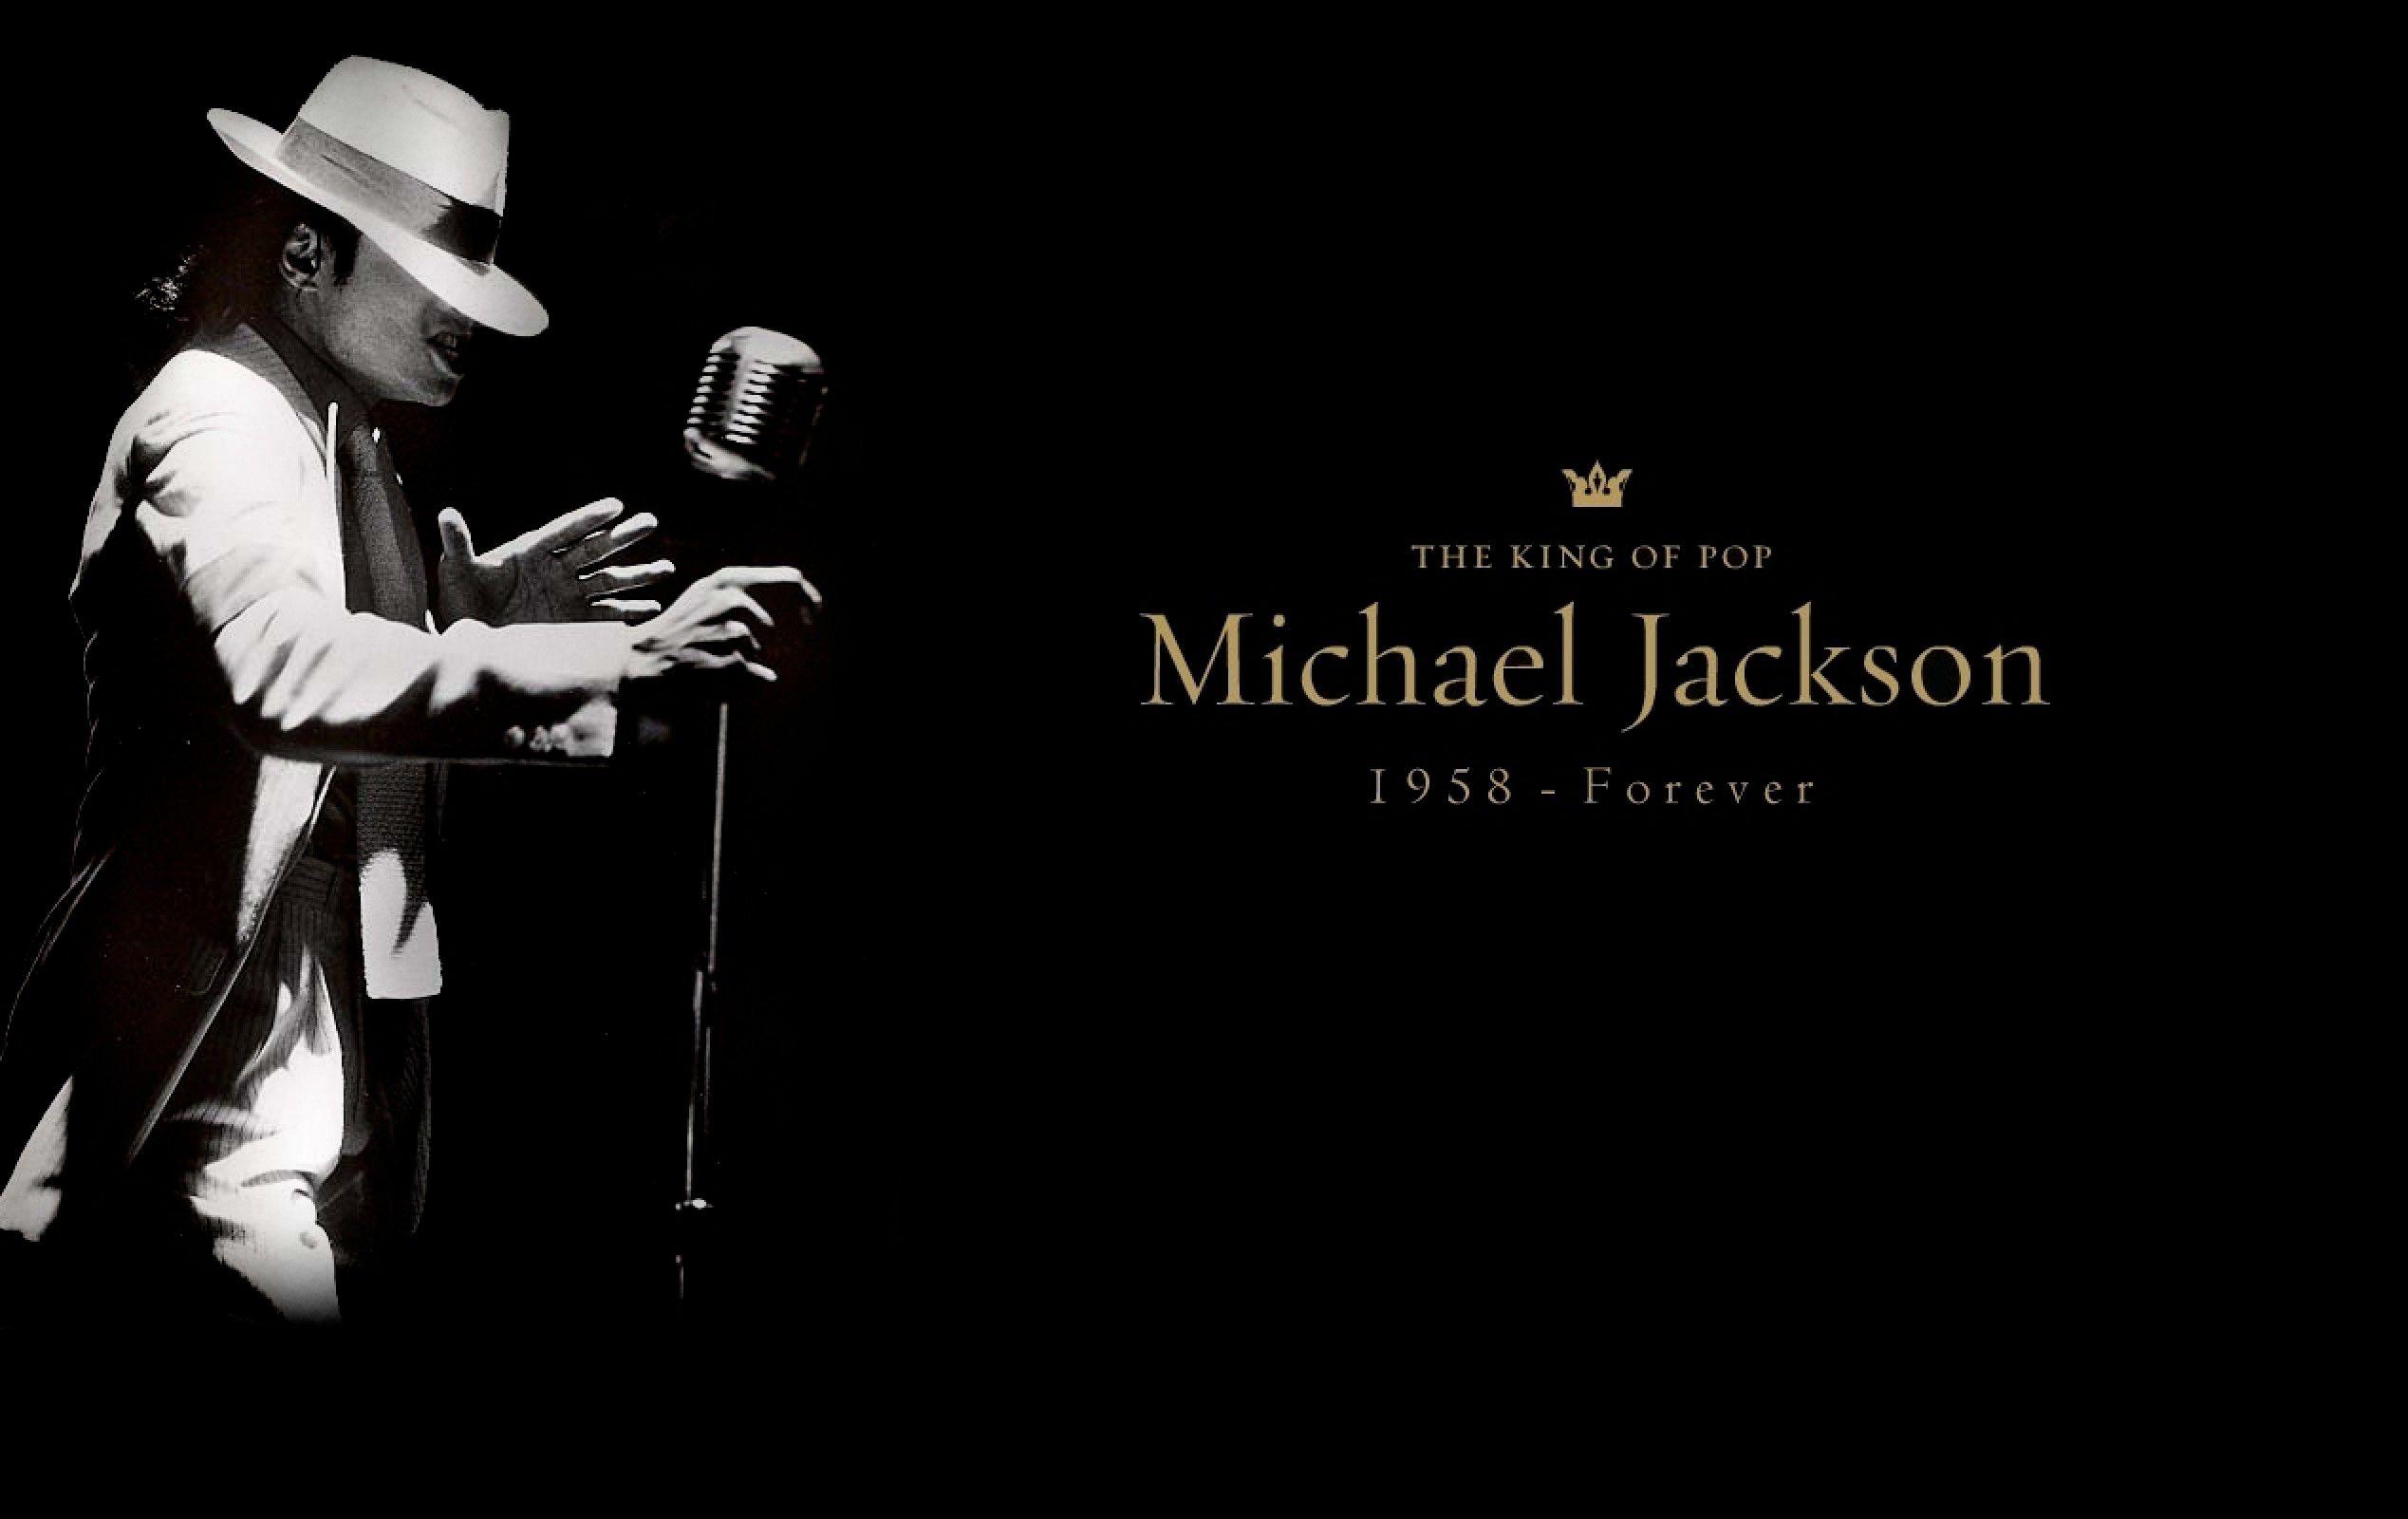 Michael Jackson Black Wall Sticker and Wallpaper Size(59*47)cm : Amazon.in:  Home Improvement